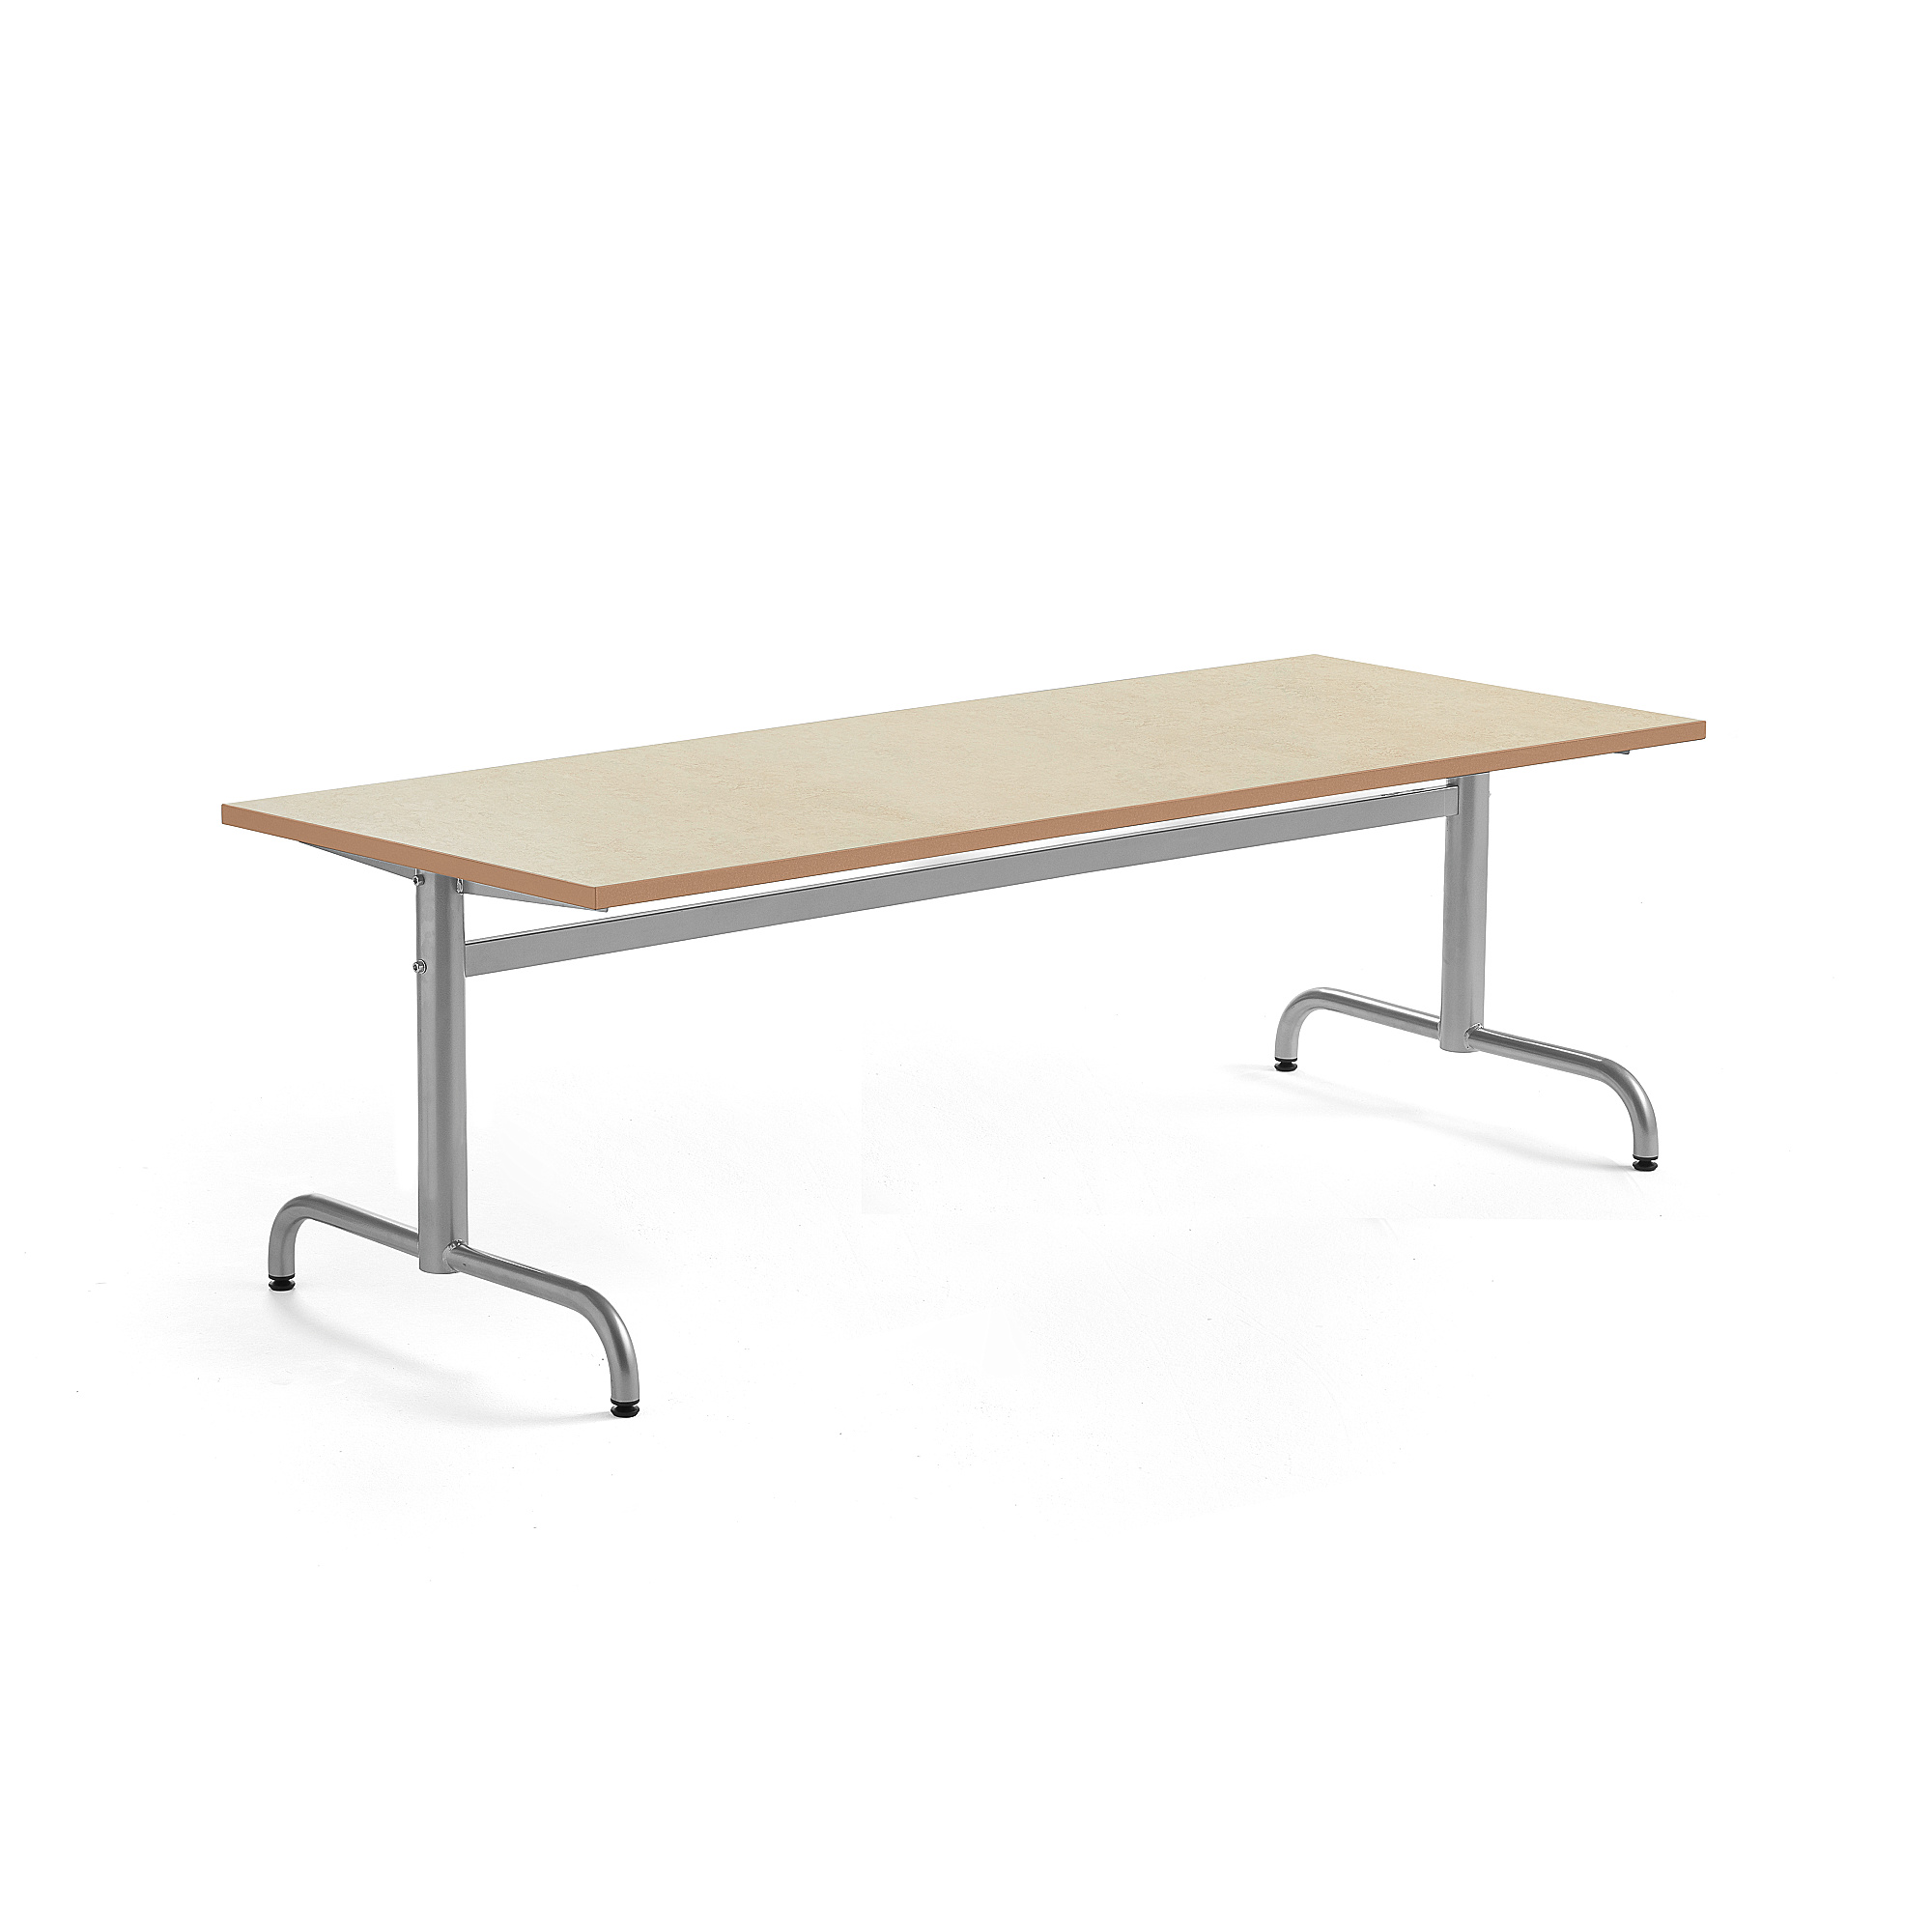 Stůl PLURAL, 1800x700x600 mm, linoleum, béžová, stříbrná